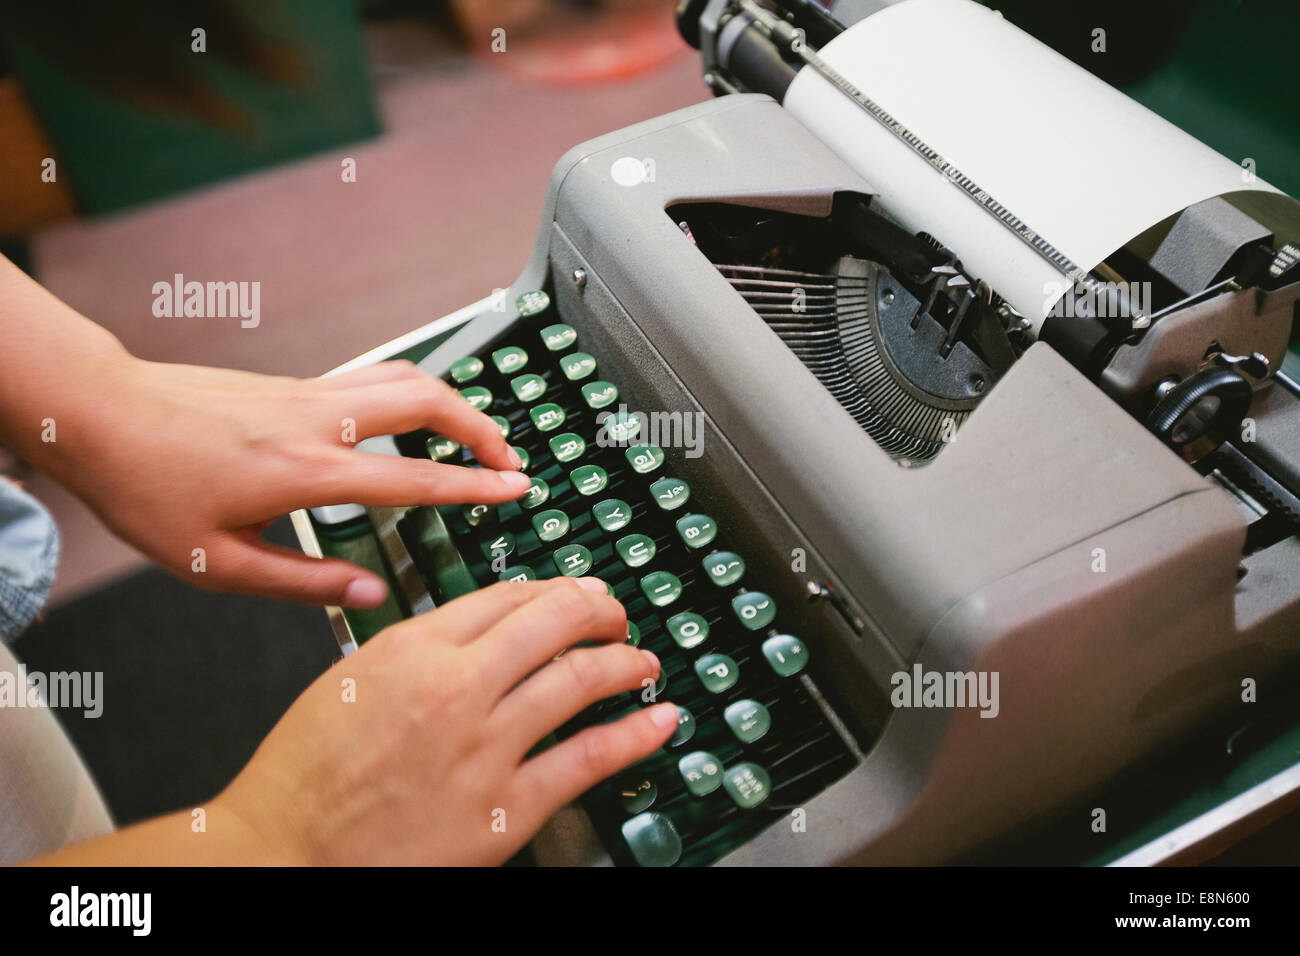 Typewriter with hand Stock Photo